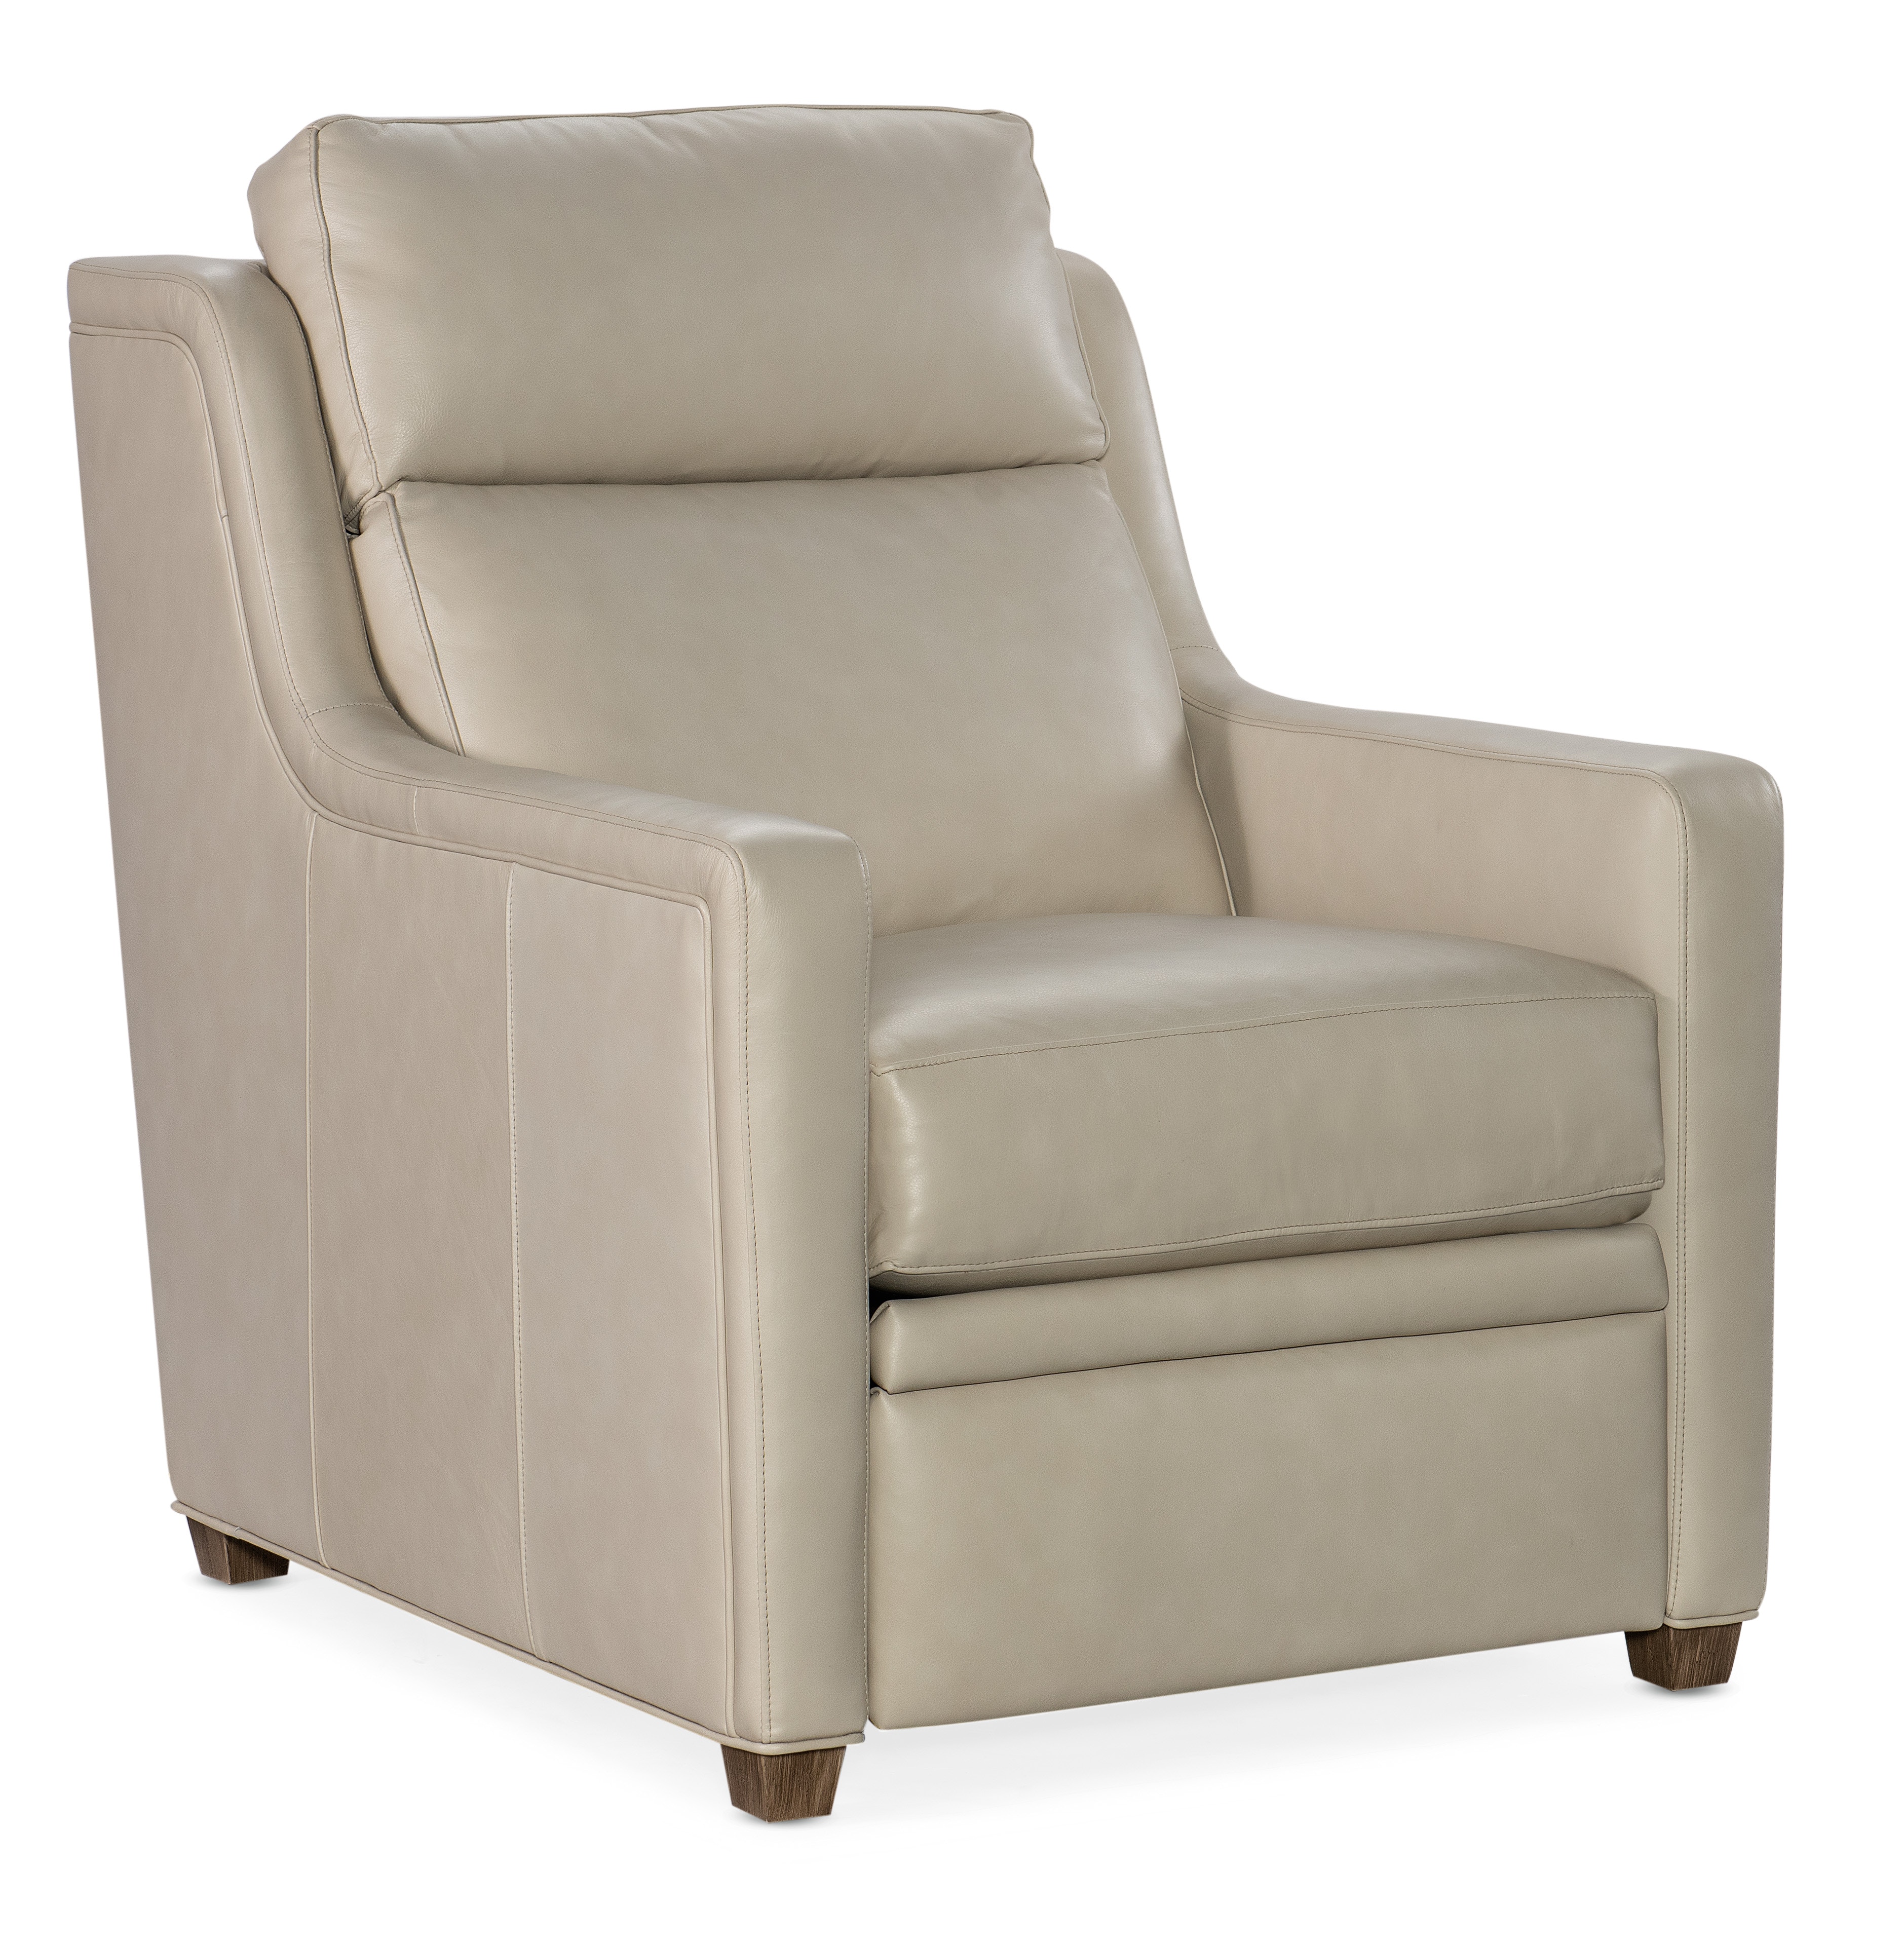 Bradington Young Living Room Hambrick Chair Full Recline 950-35 